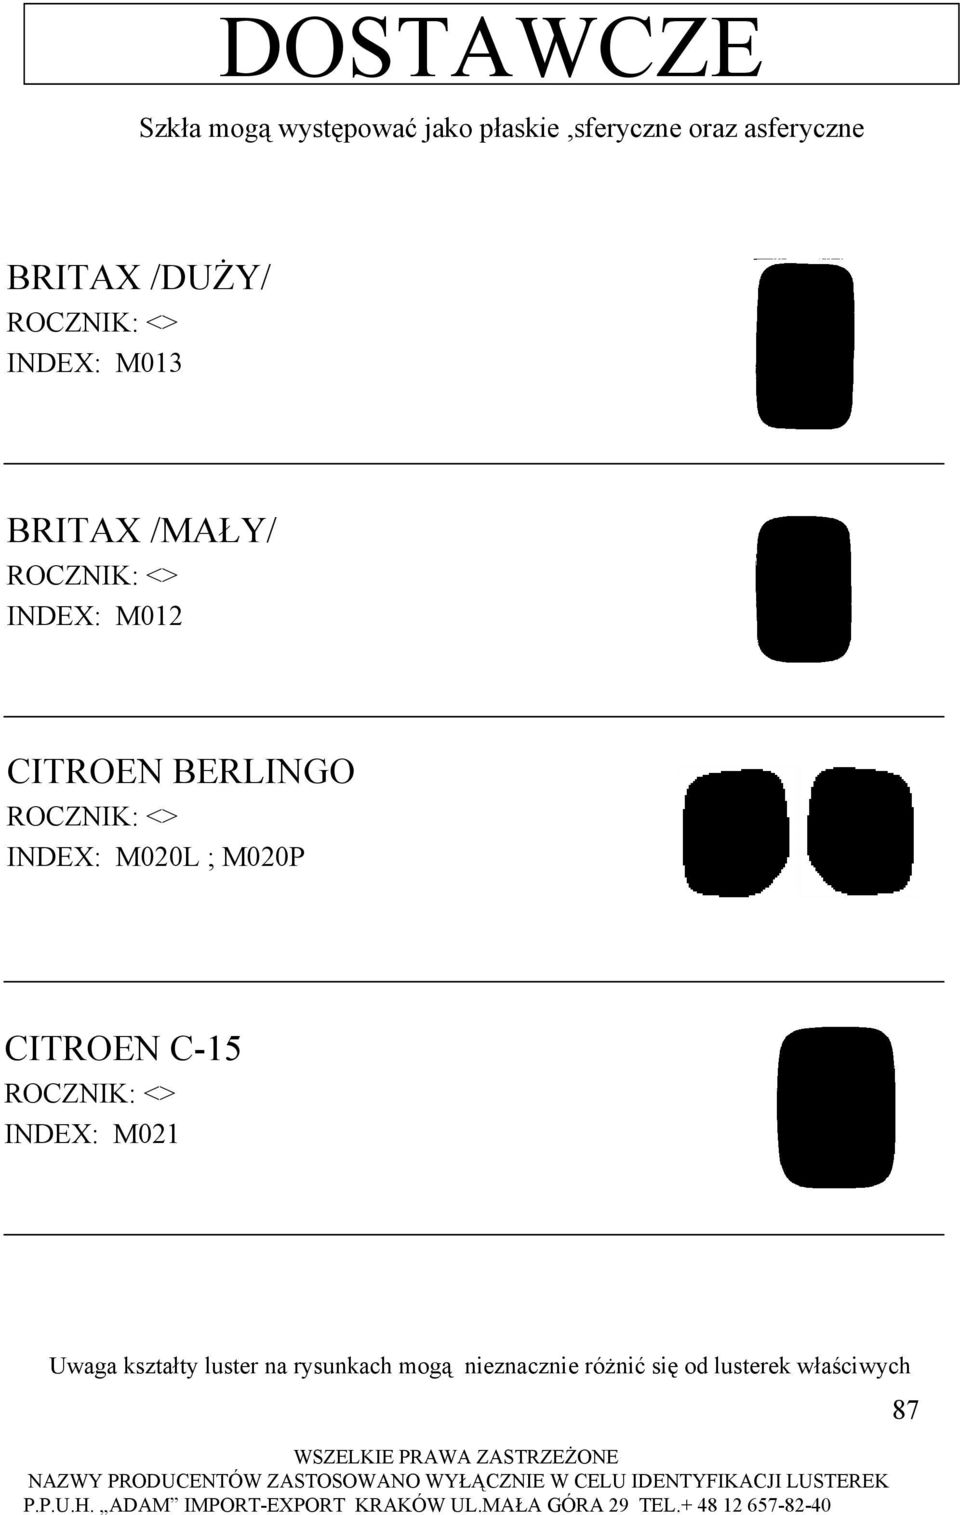 CITROEN BERLINGO INDEX: M020L